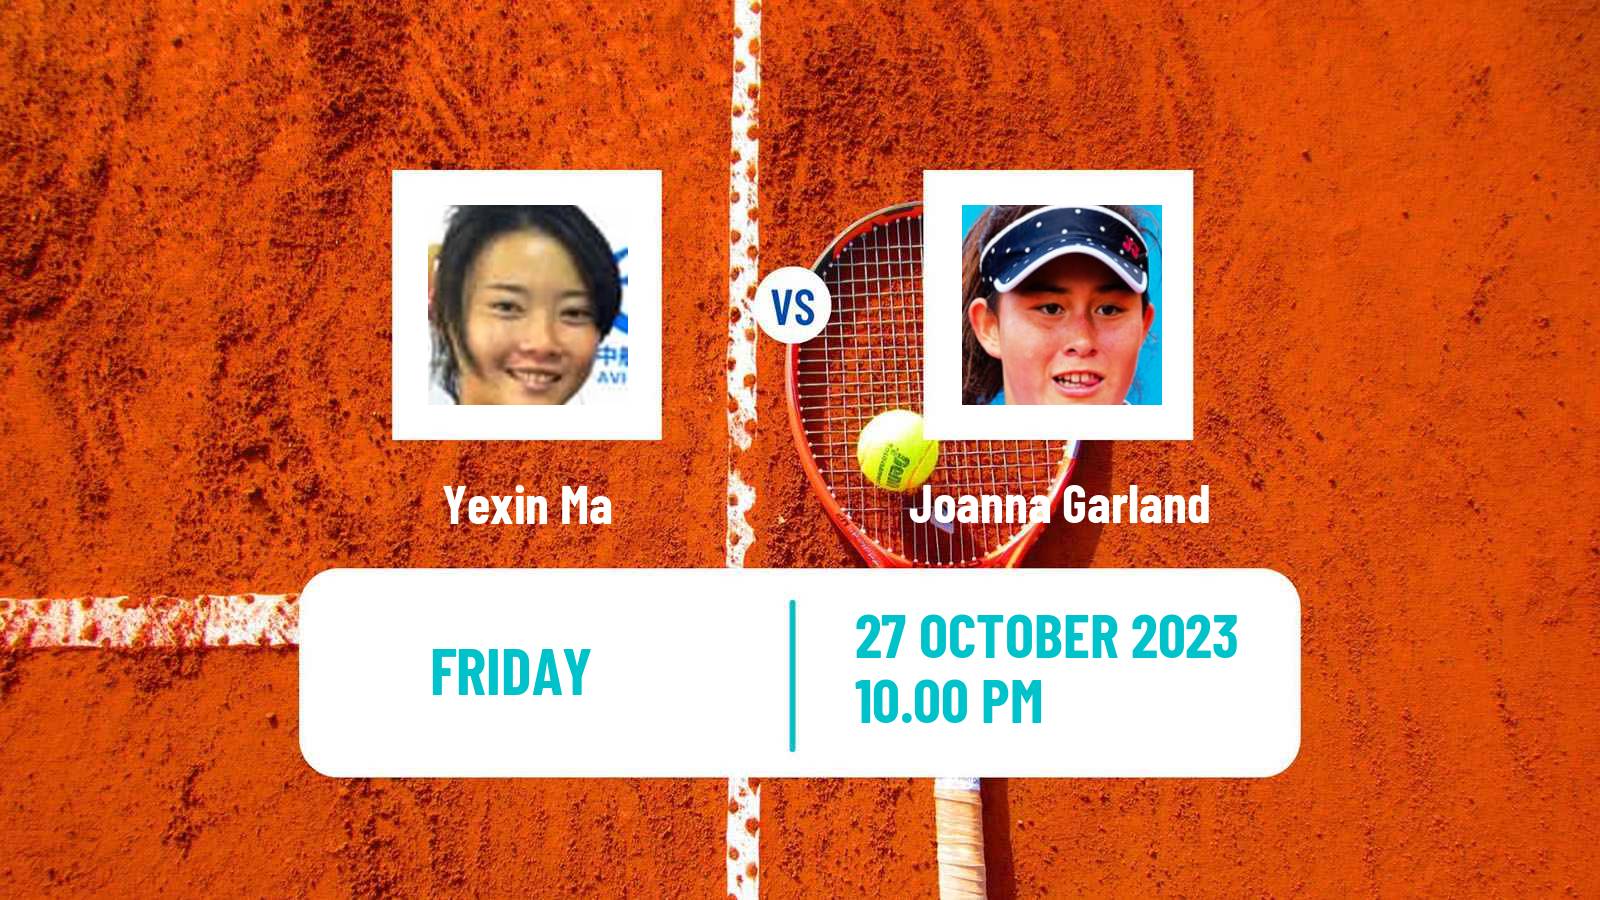 Tennis ITF W60 Playford Women Yexin Ma - Joanna Garland